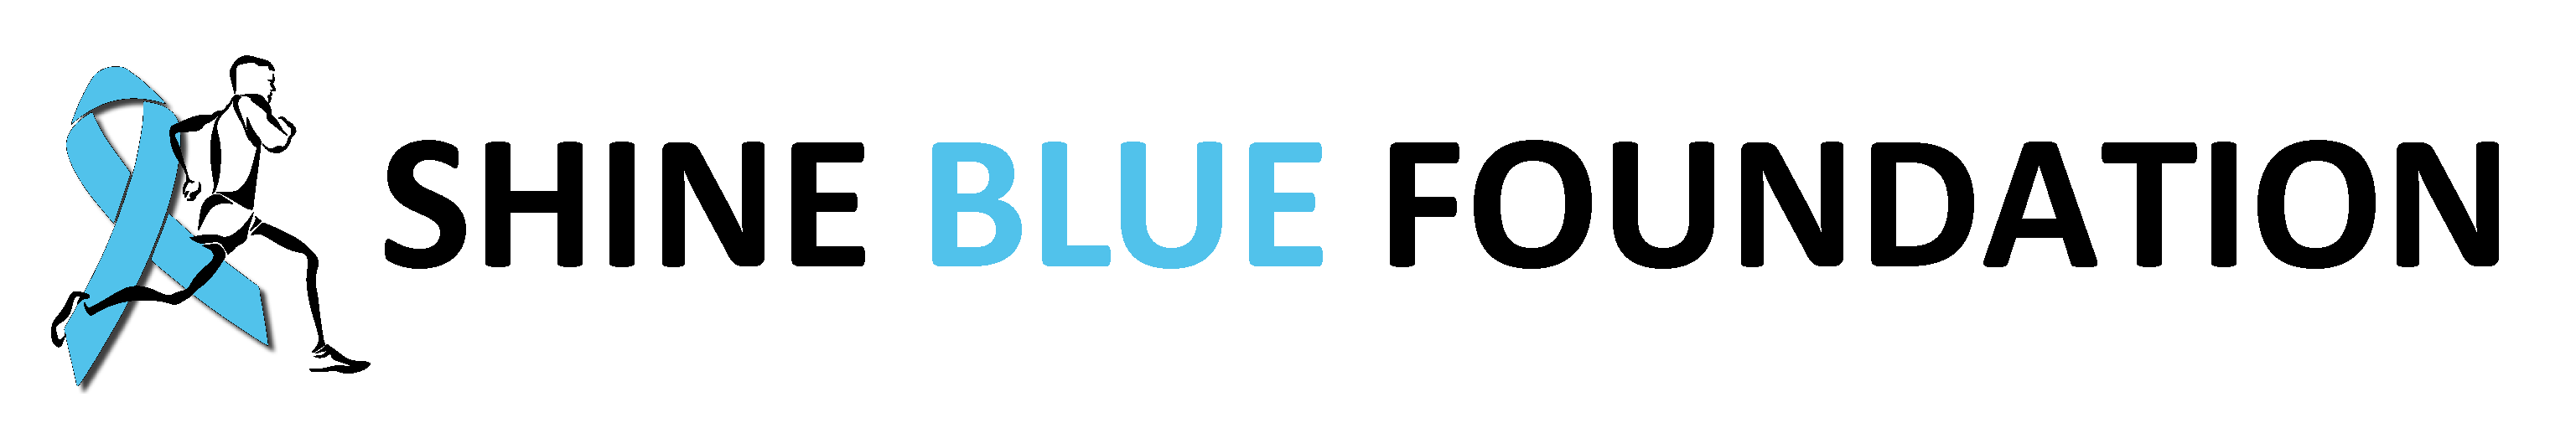 Shine Blue Foundation